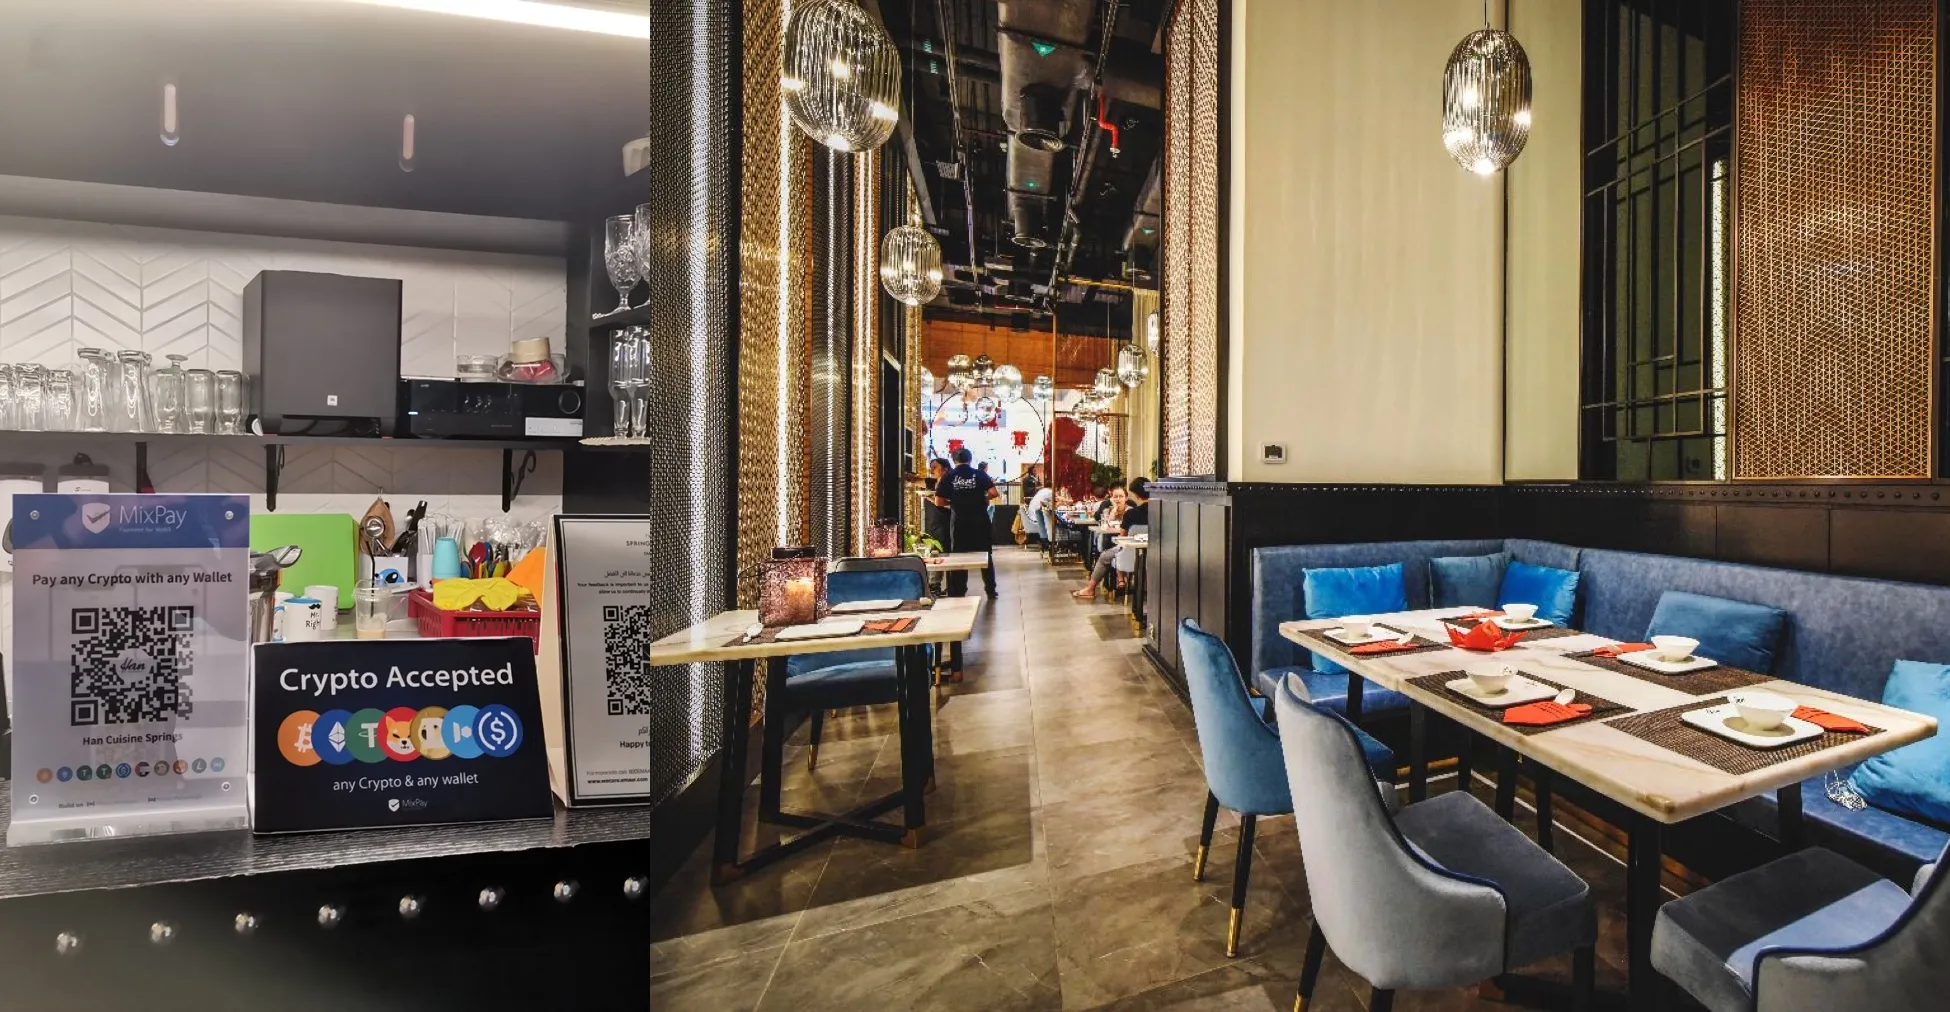 Han Cuisine Restaurant and MixPay Reached a Strategic Partnership